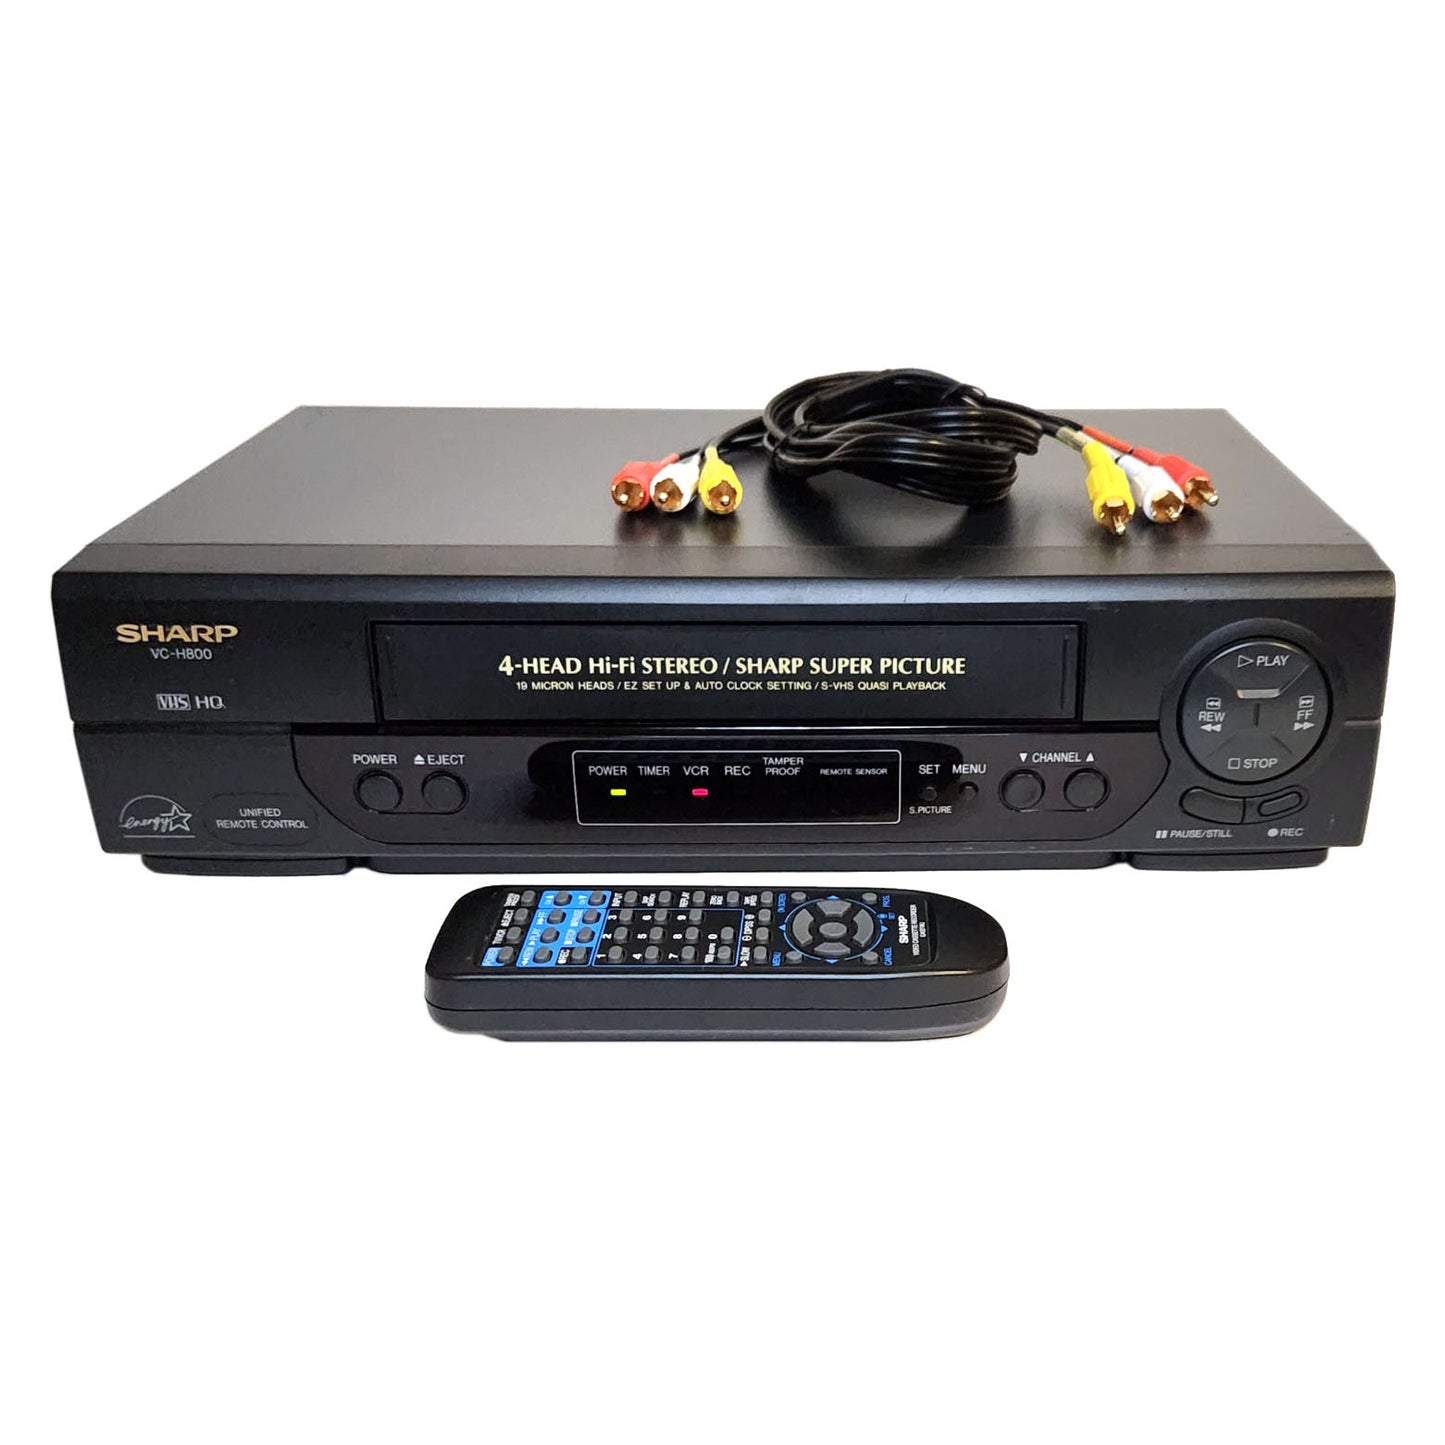 Sharp VC-H800U VCR, 4-Head Hi-Fi Stereo